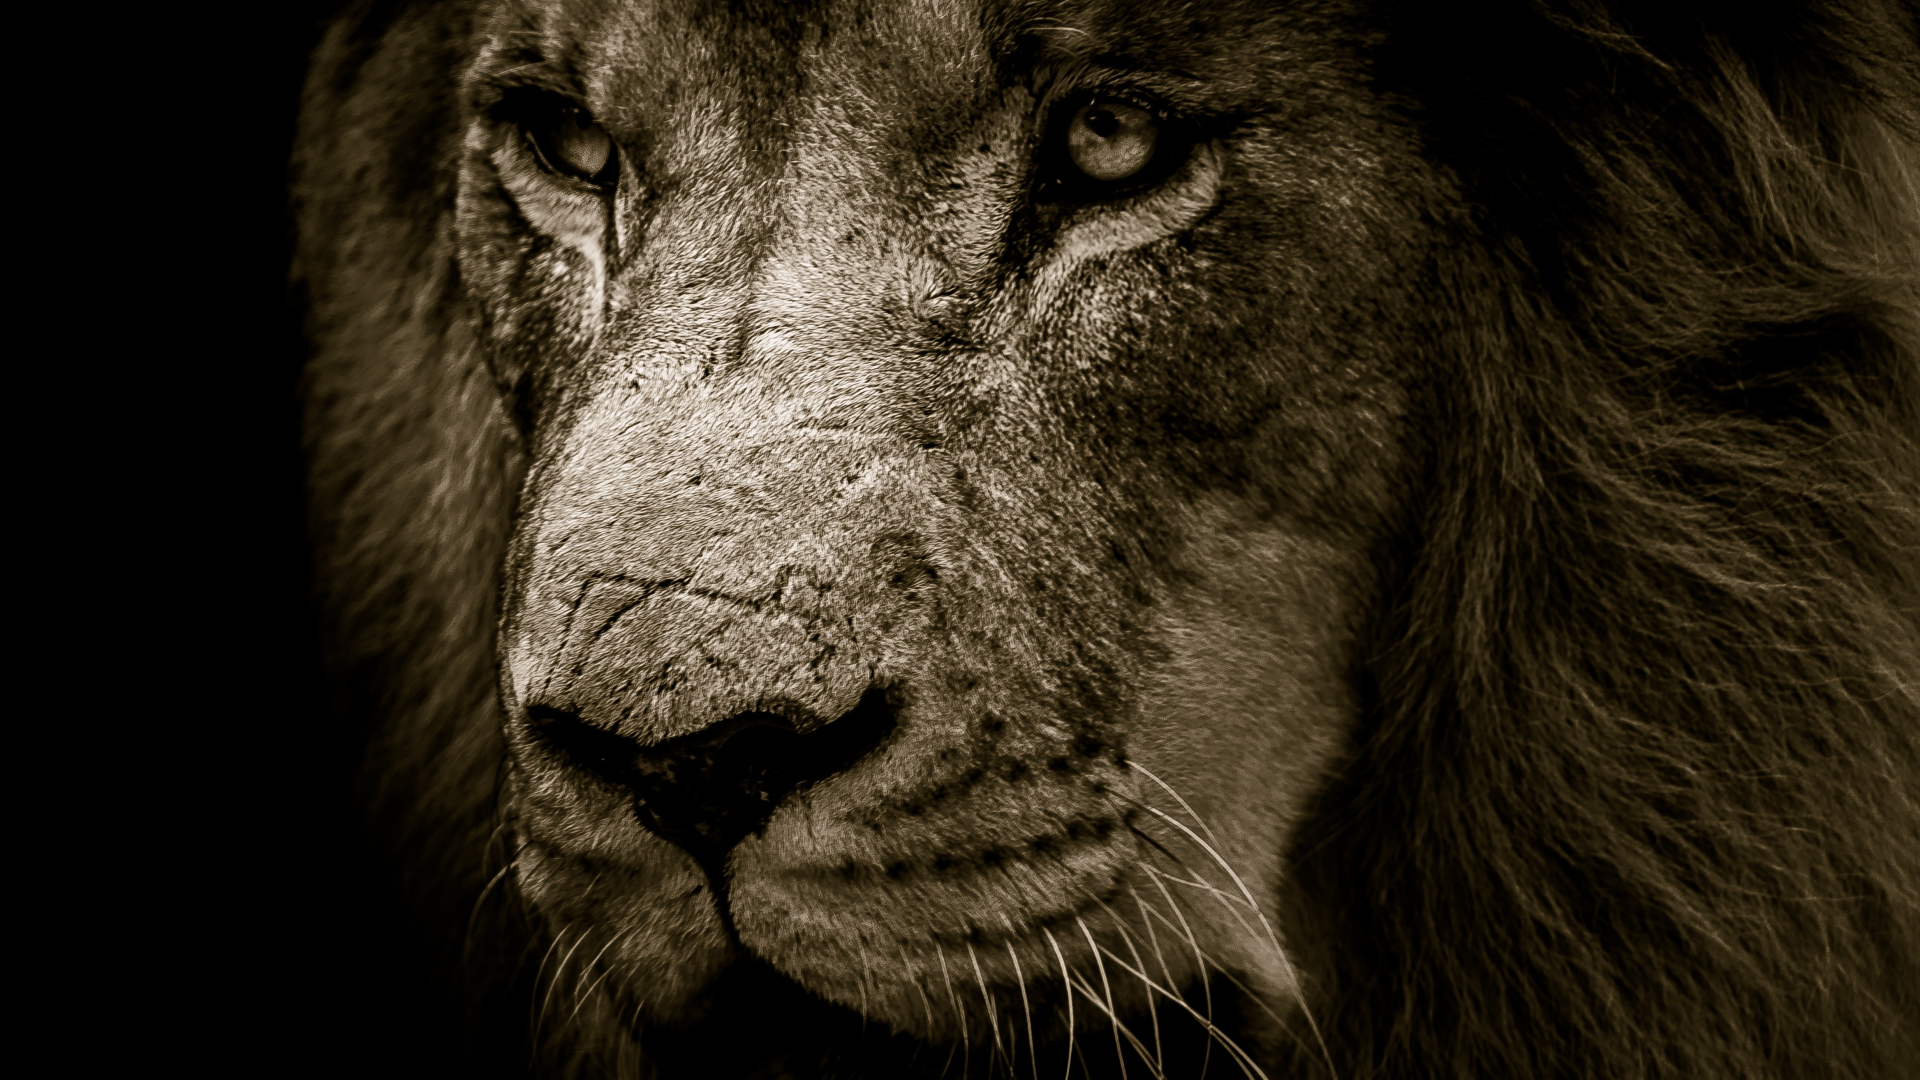 Download wallpaper 1920x1080 lion, fur, muzzle, predator, full hd, hdtv ...